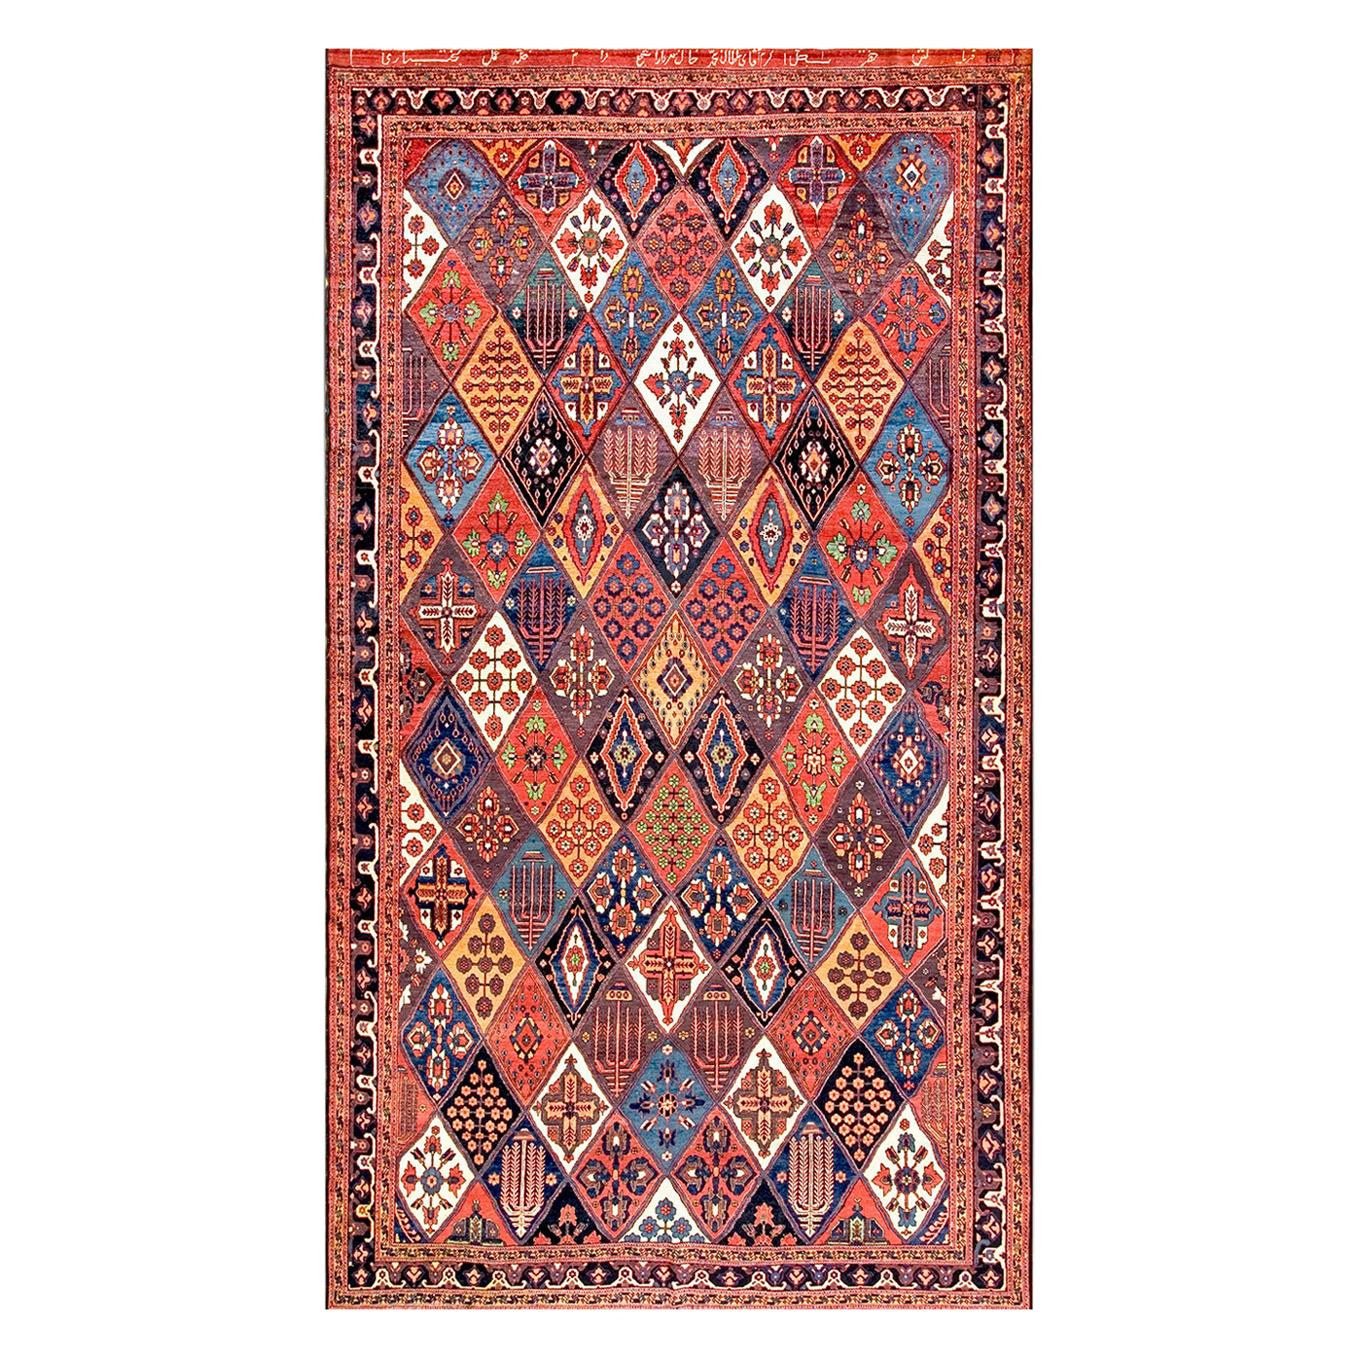 Late 19th Century Inscribed Persian Bakhtiari Carpet (7'4" x 13'3" - 224 x 404)